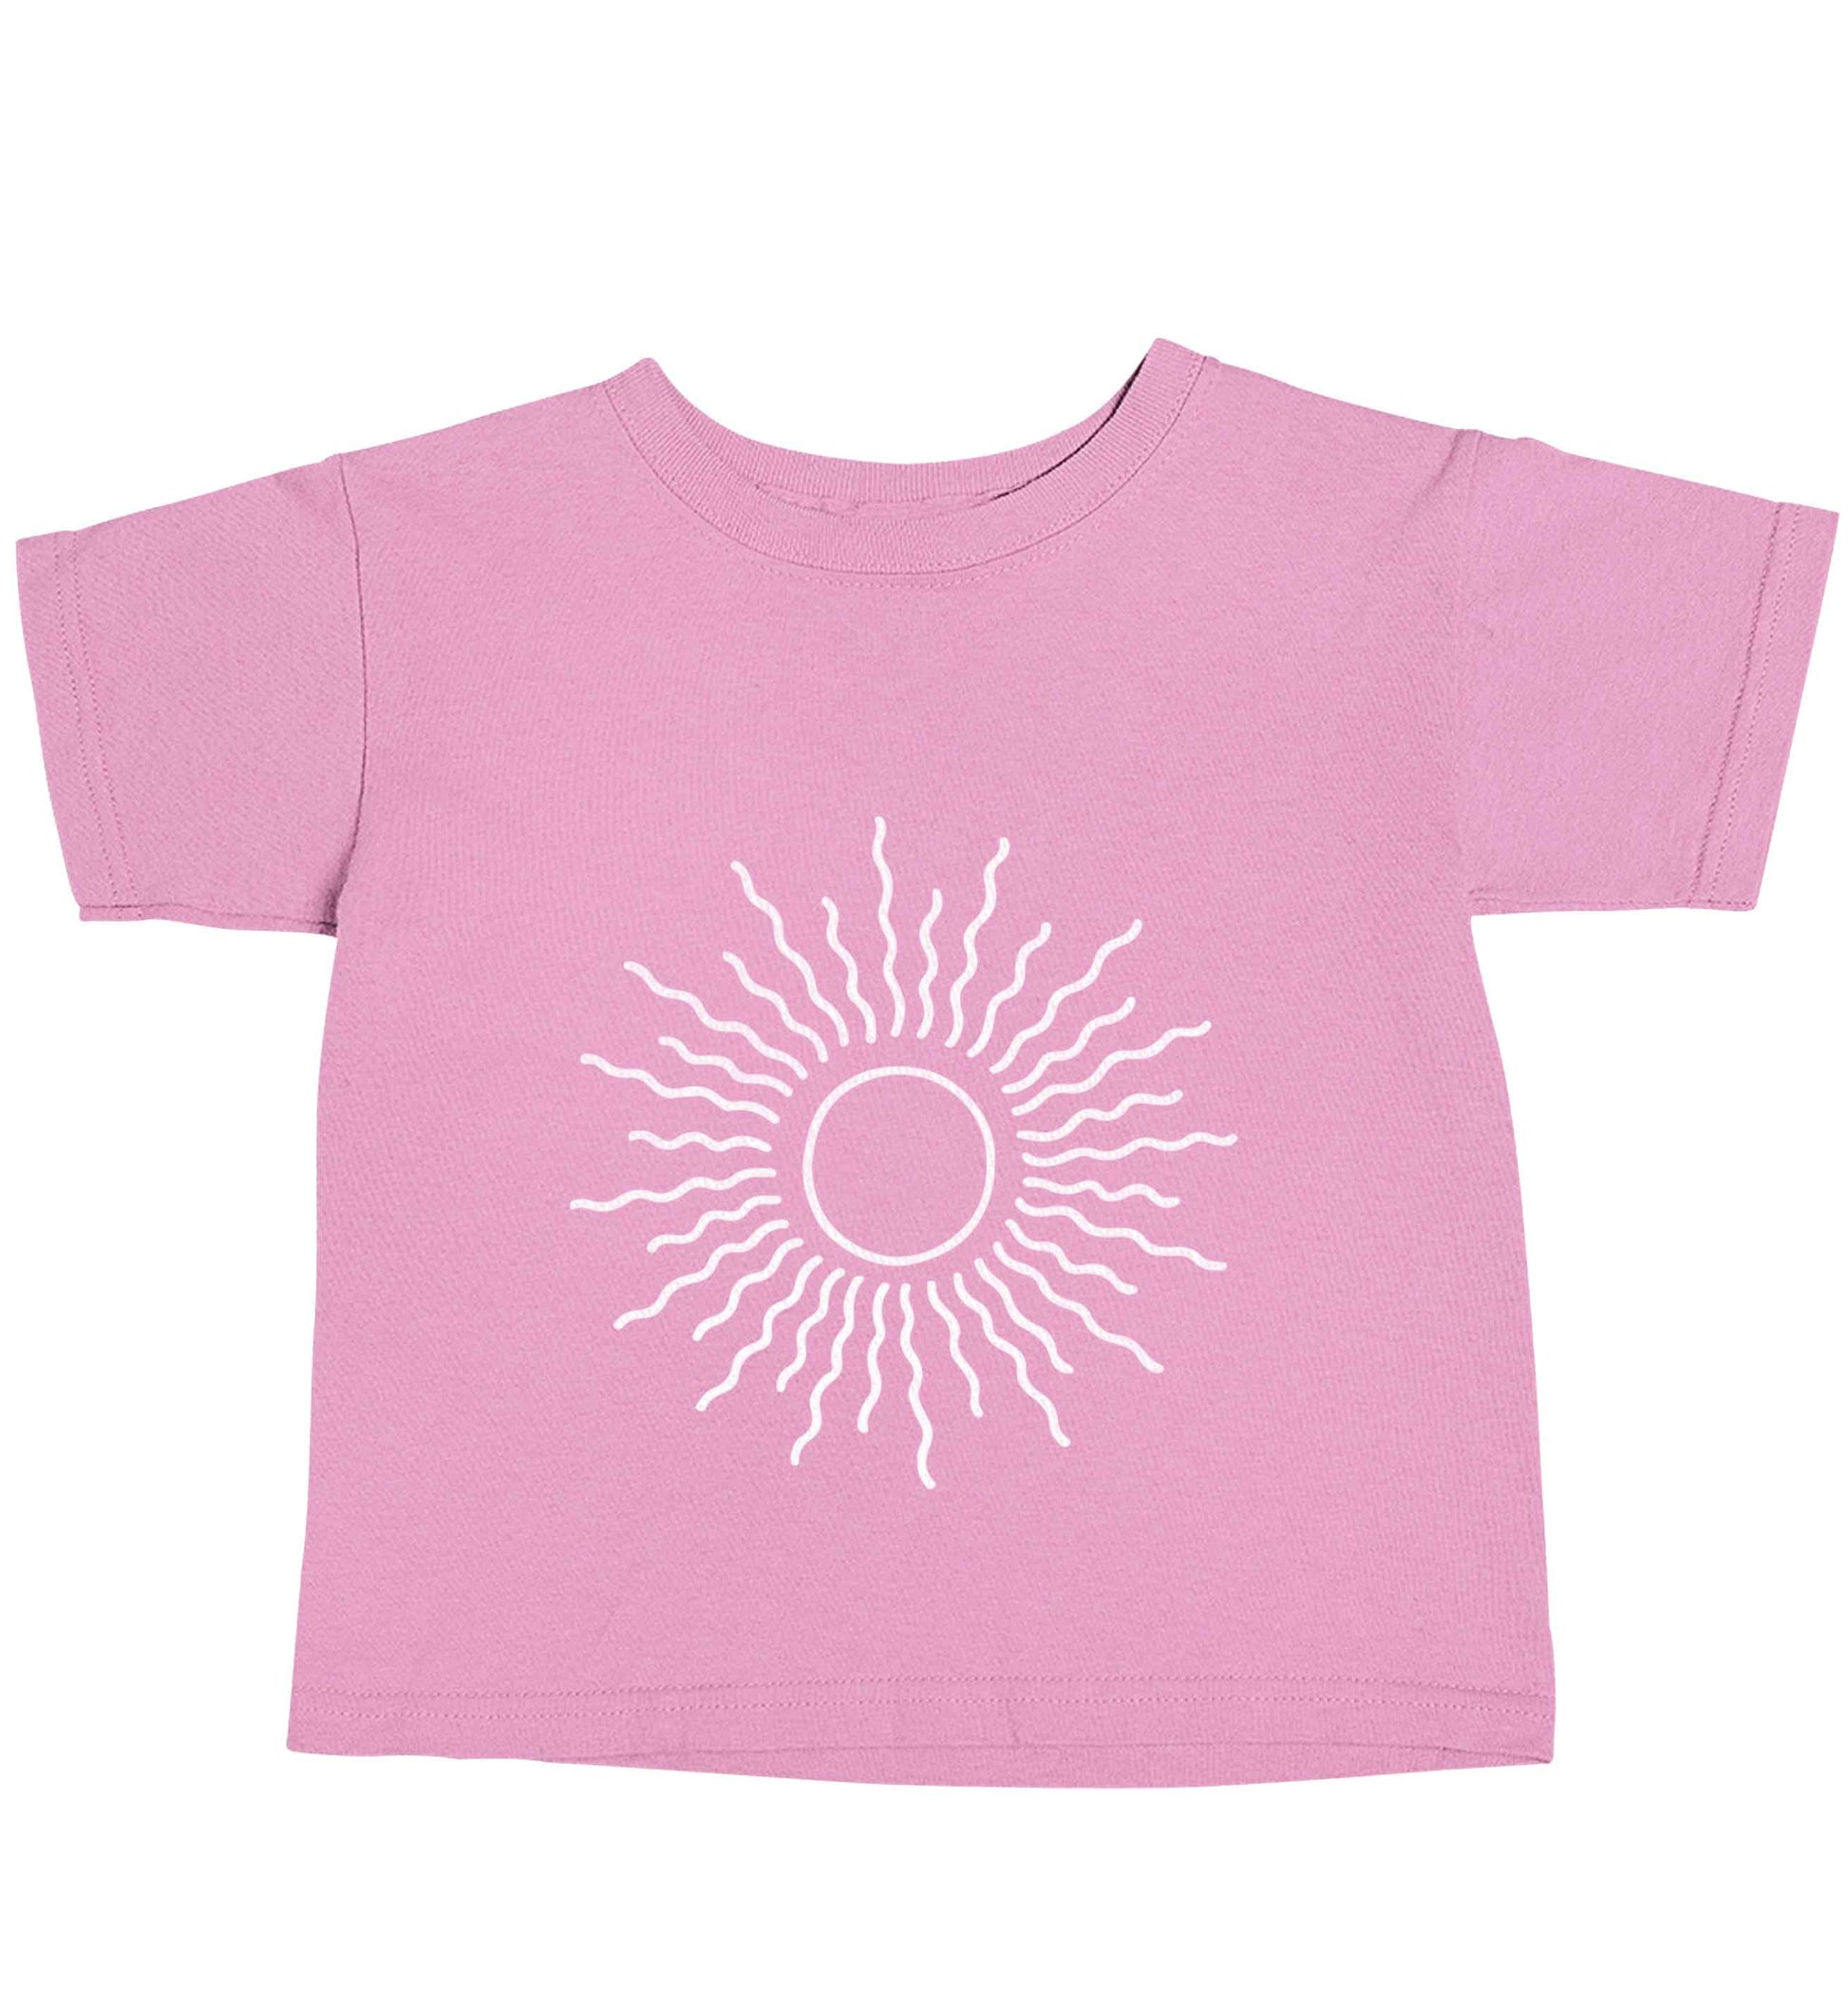 Sun illustration light pink baby toddler Tshirt 2 Years